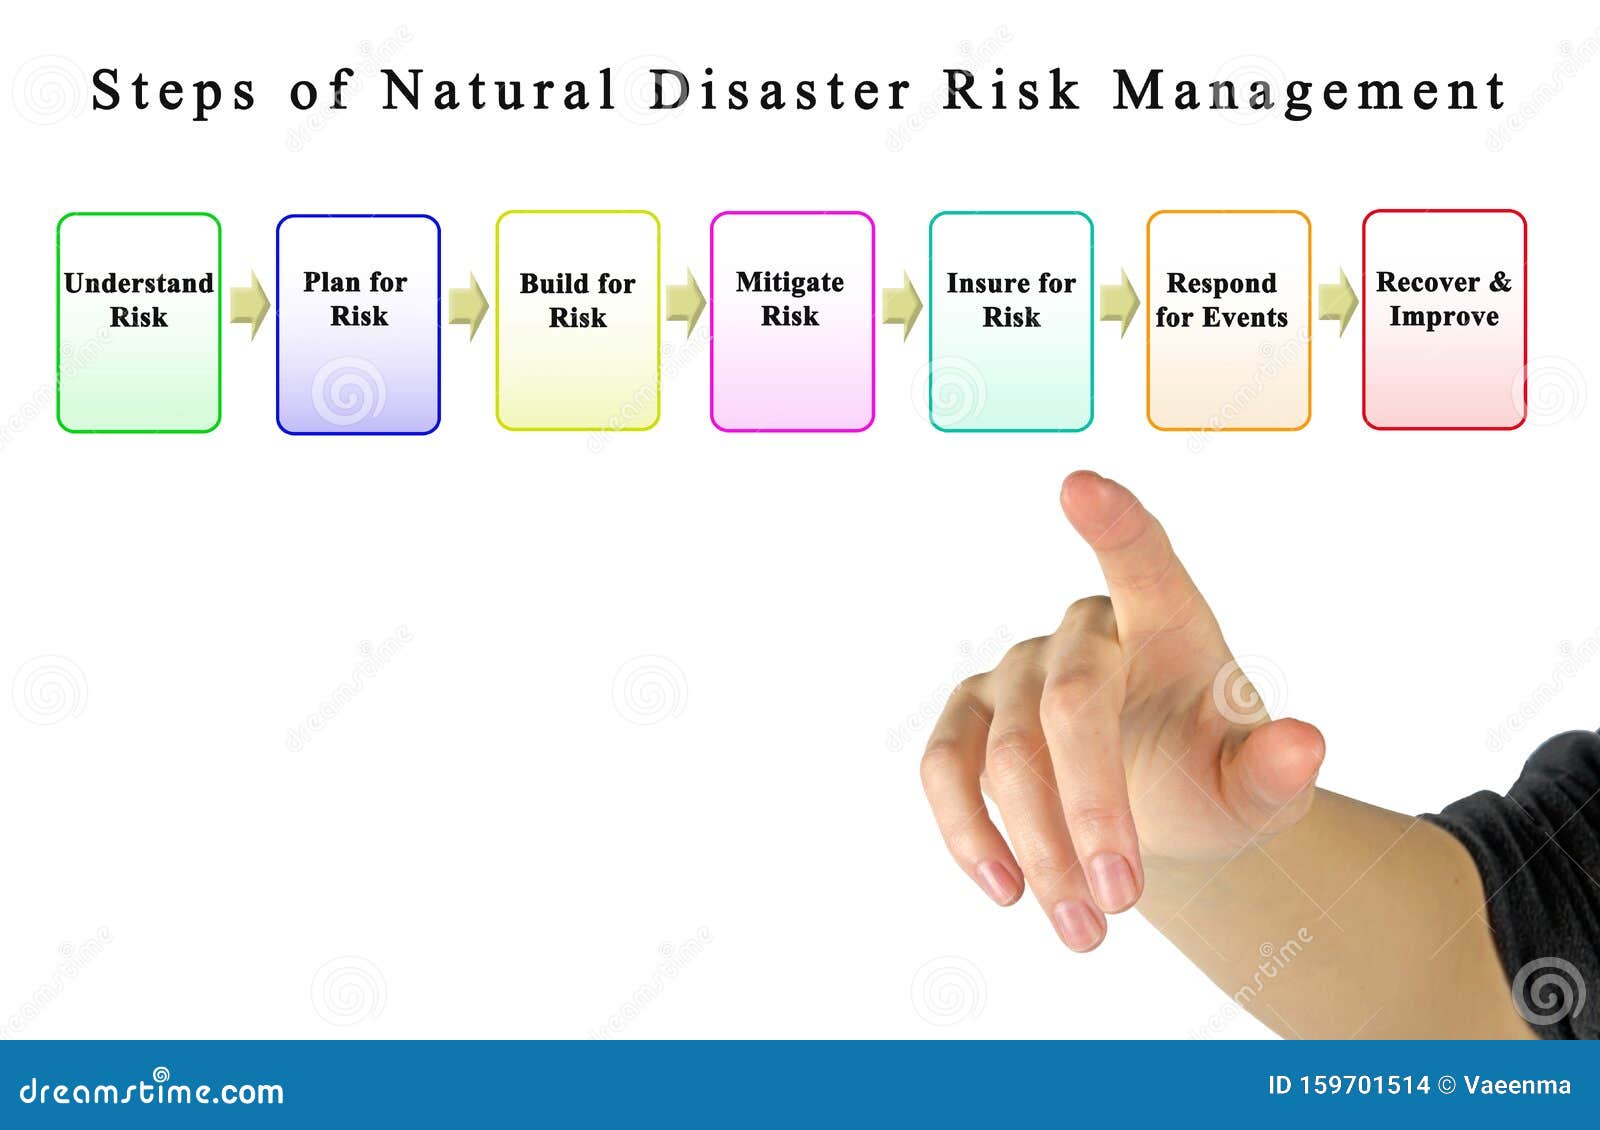 Natural disaster risk management jobs